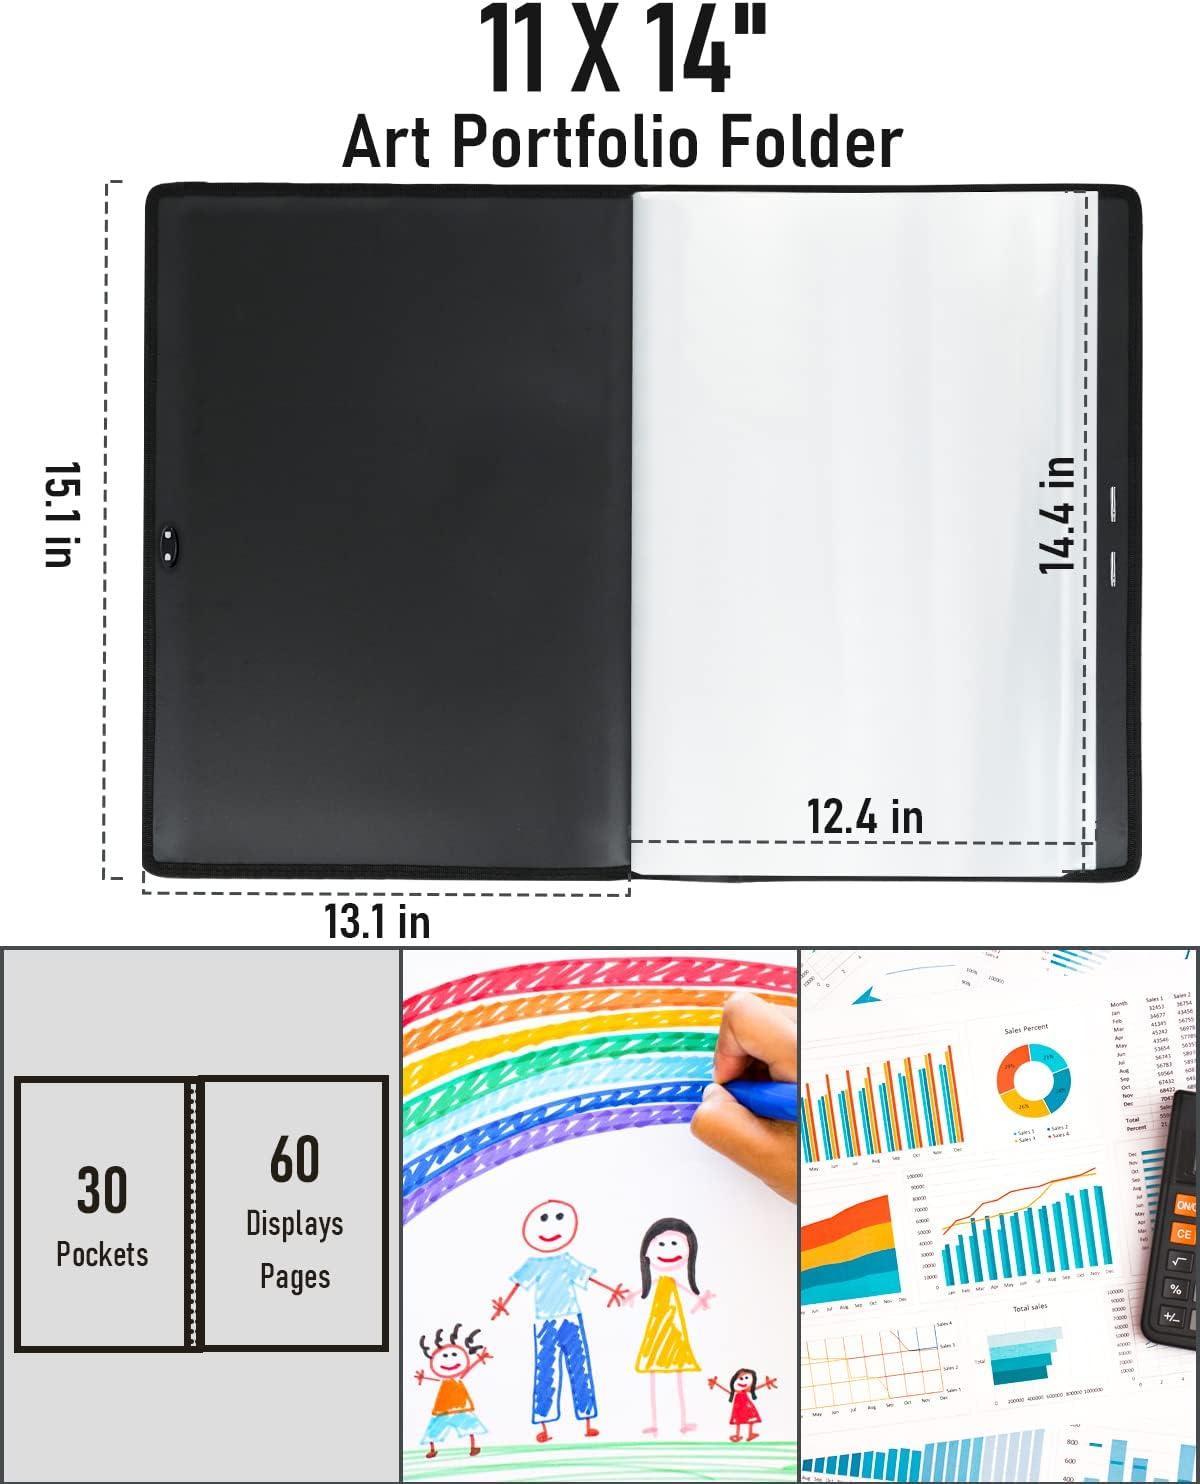 Nicpro 11x14 Art Portfolio Folder, 30 Pockets Display 60 Pages